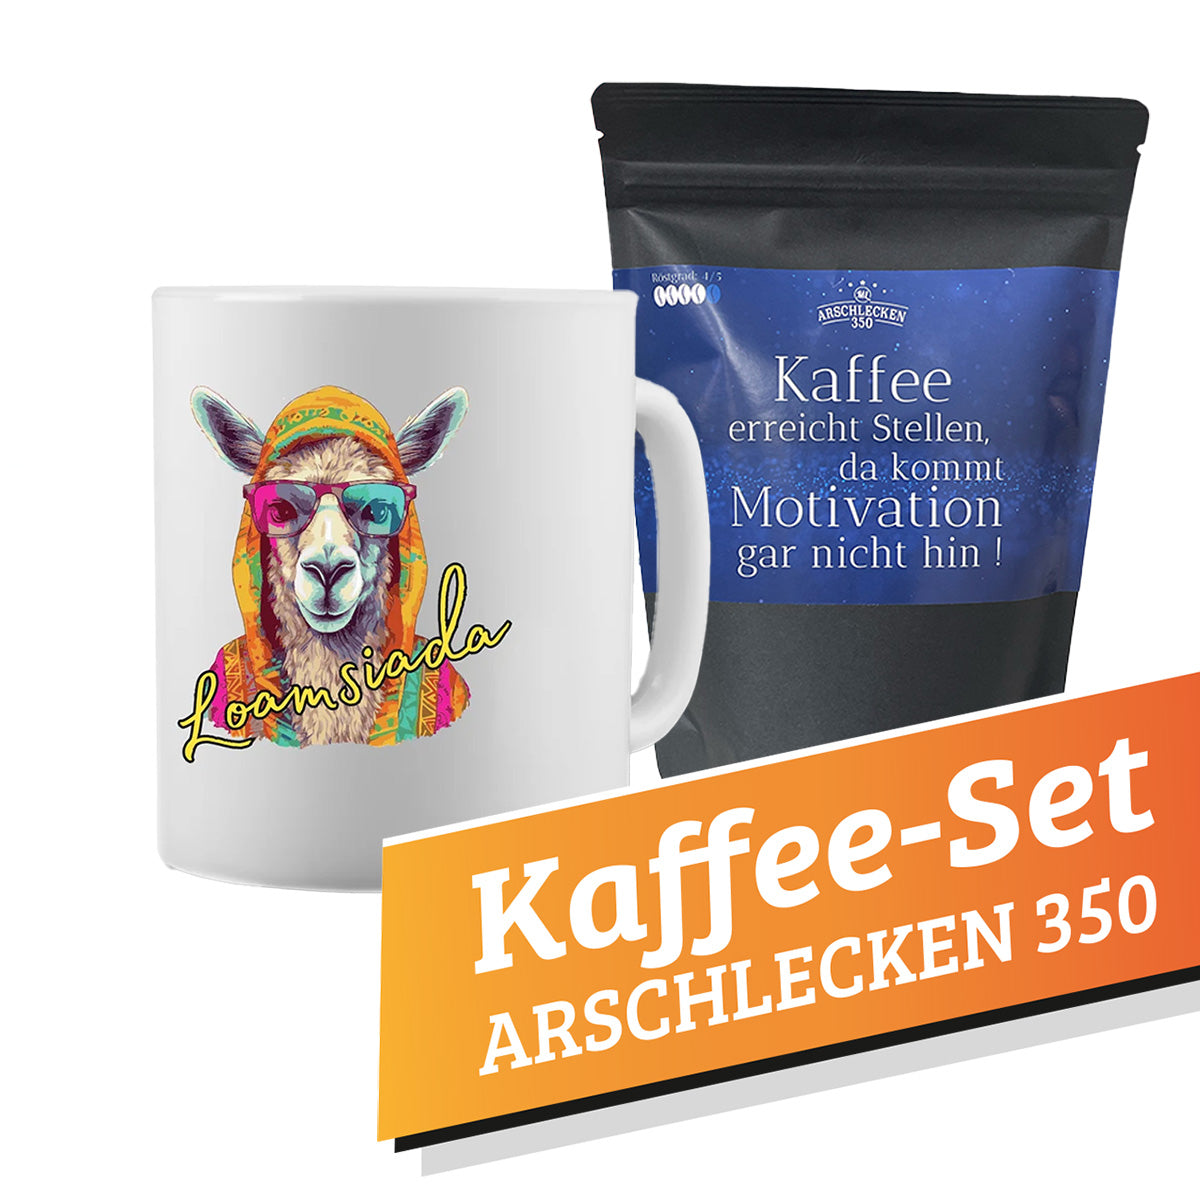 Kaffee-Set Arschlecken350 1x Tasse Lomsiada